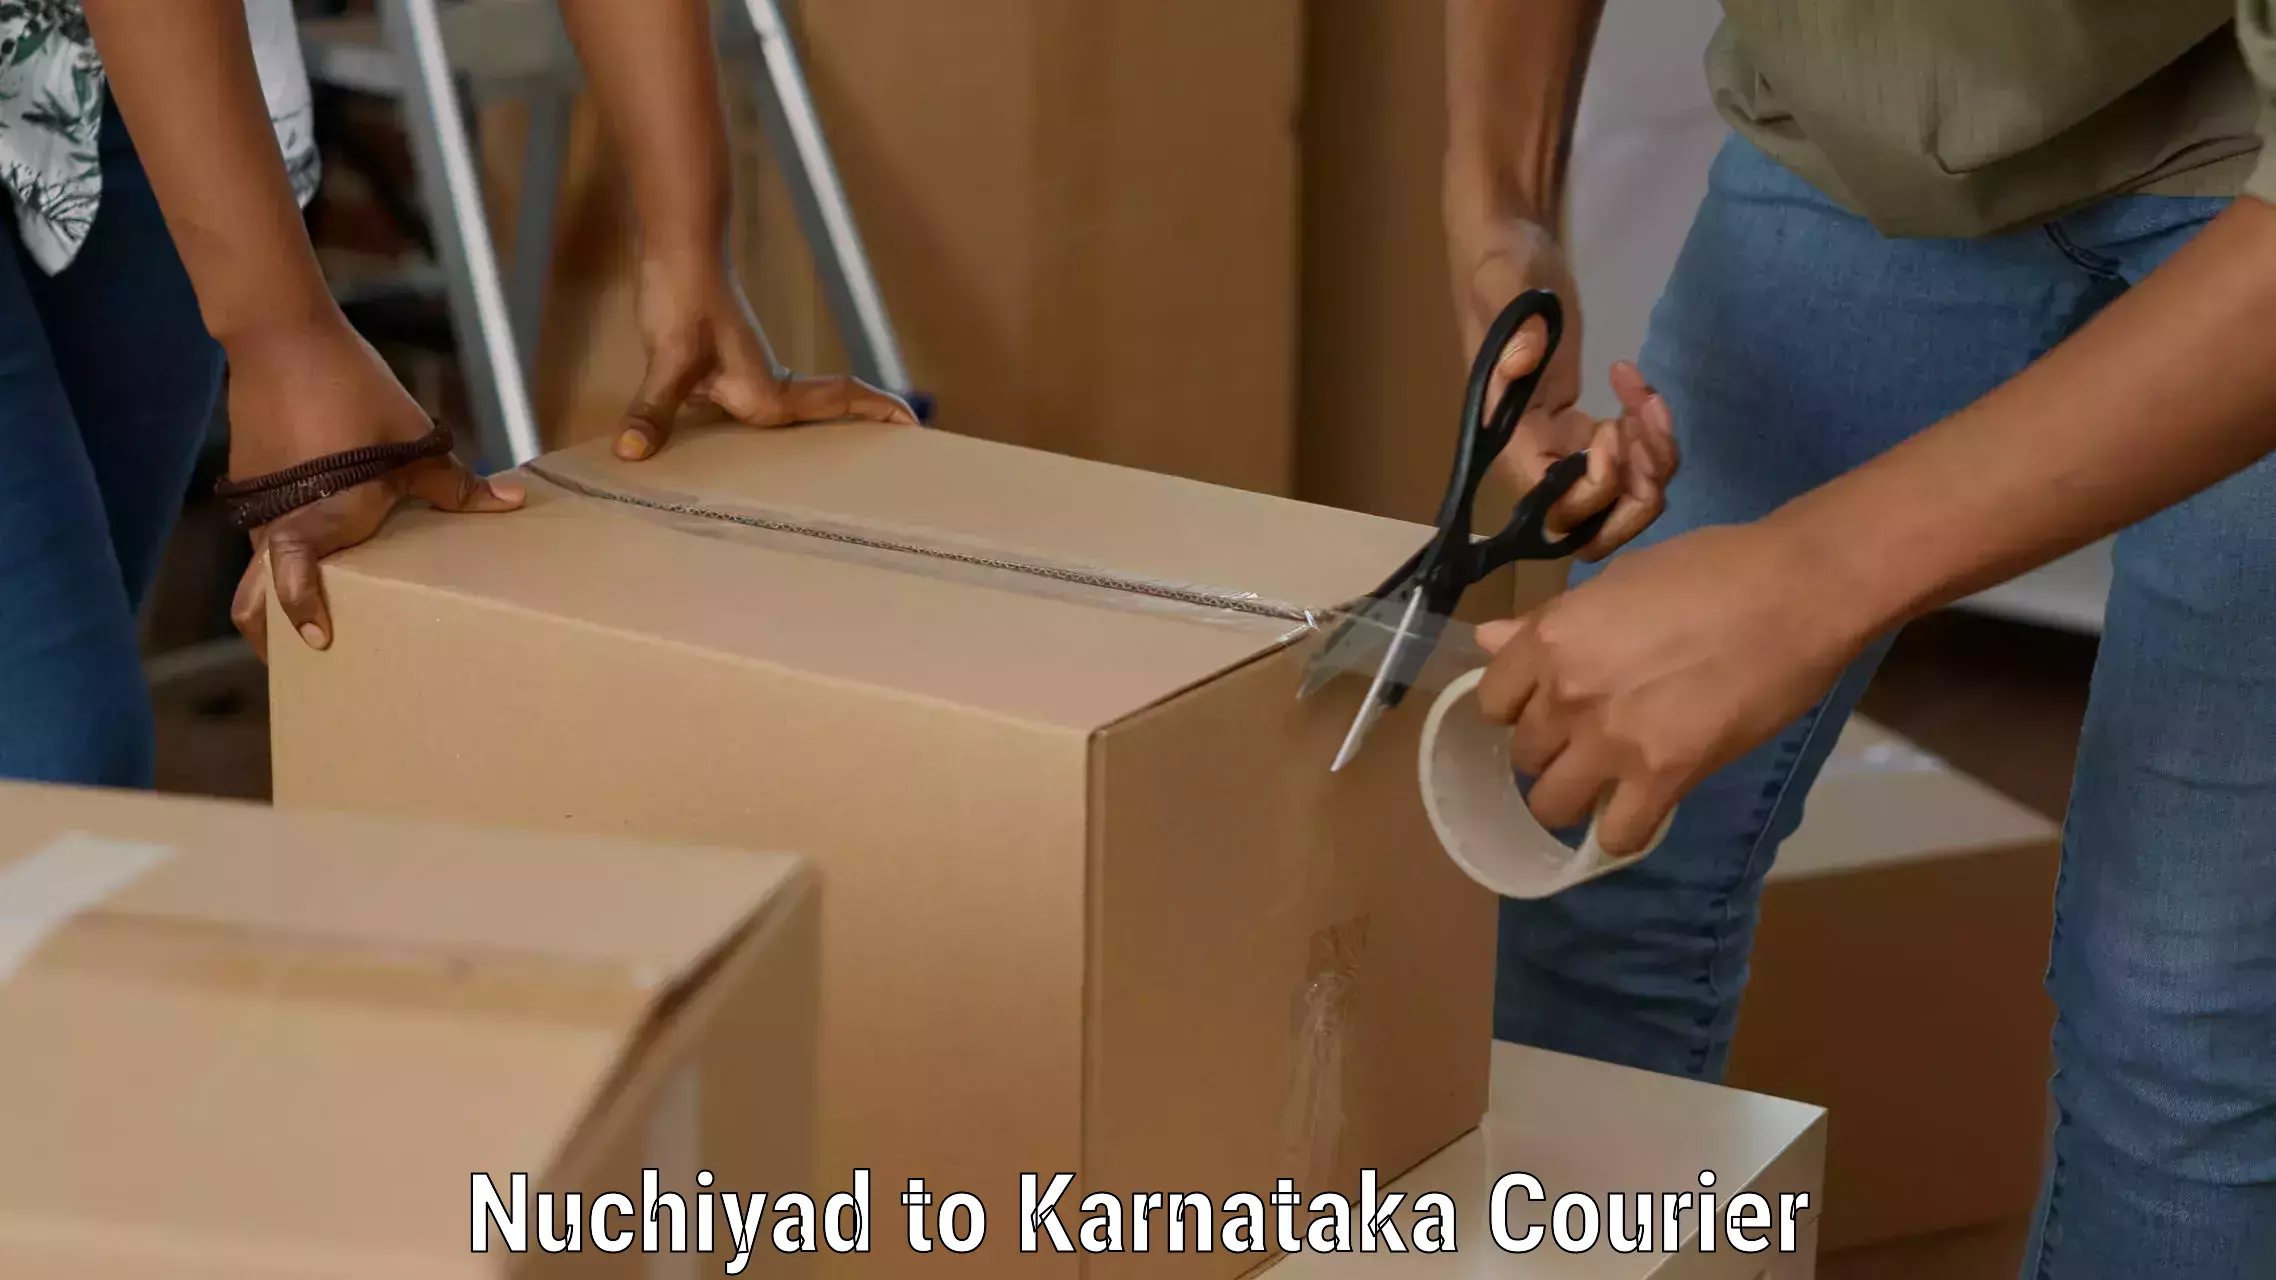 Courier service comparison Nuchiyad to Yenepoya Mangalore